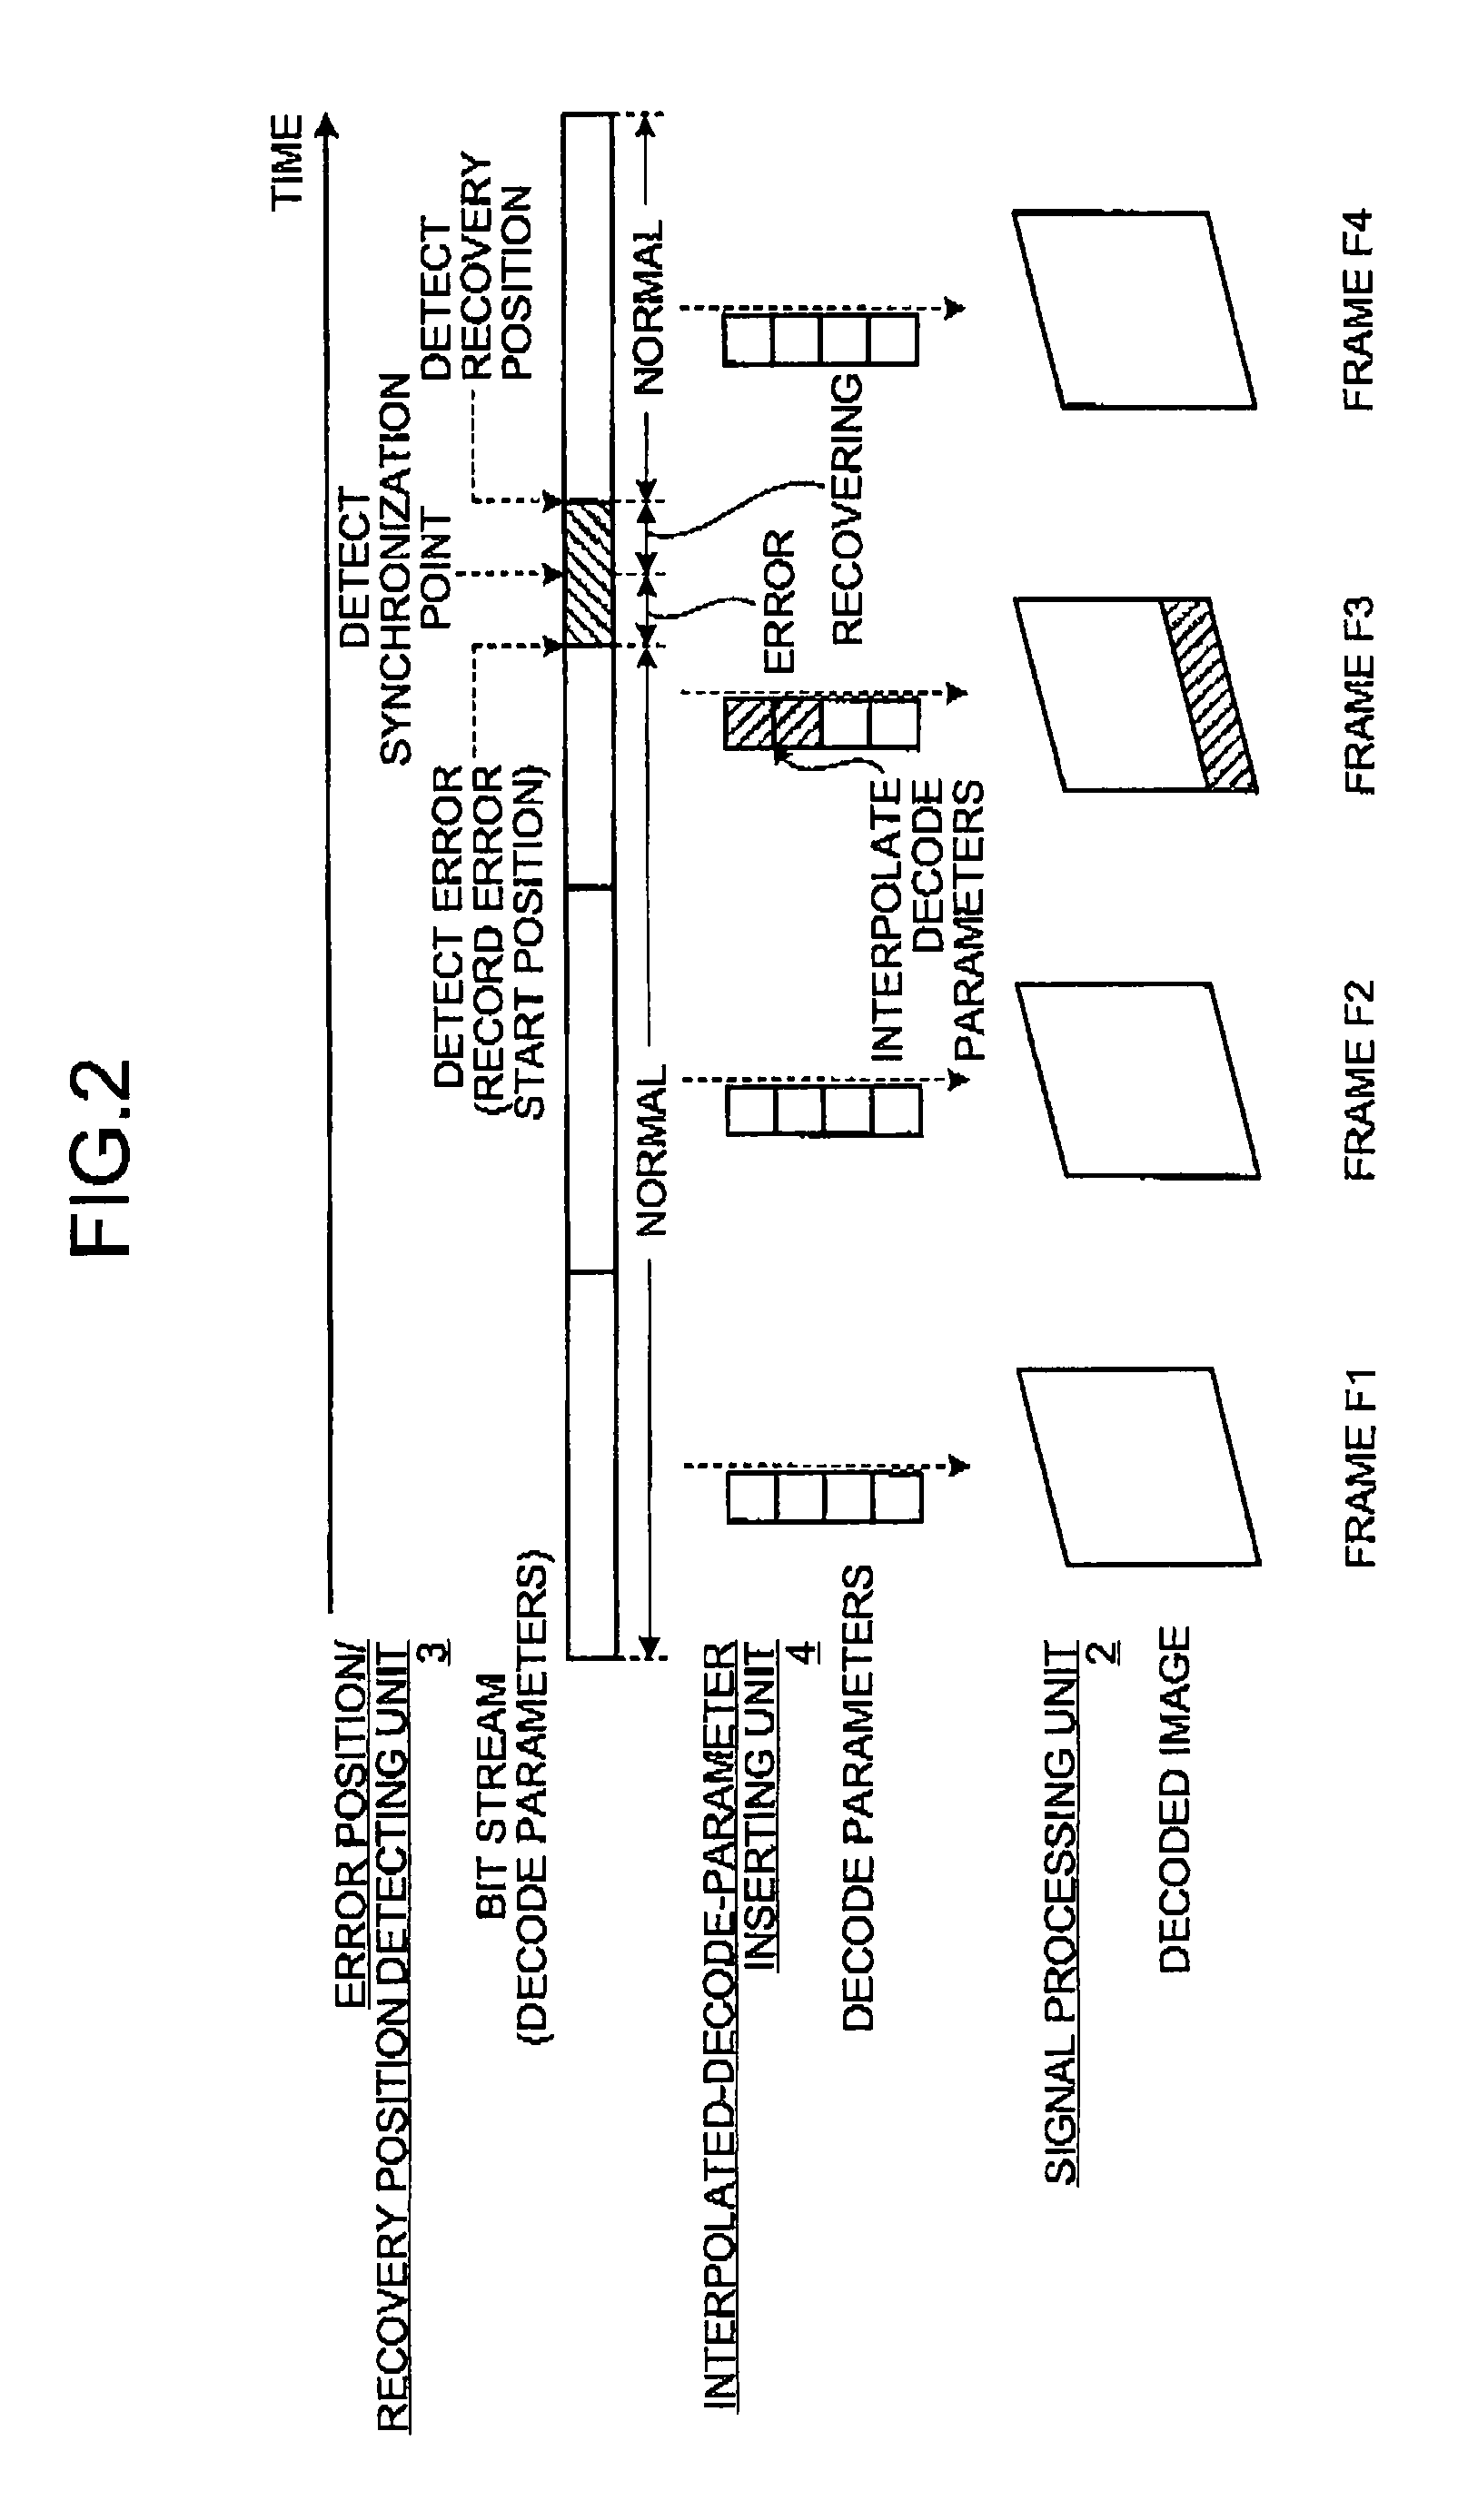 Image decoding apparatus, image decoding method, and computer-readable recording medium